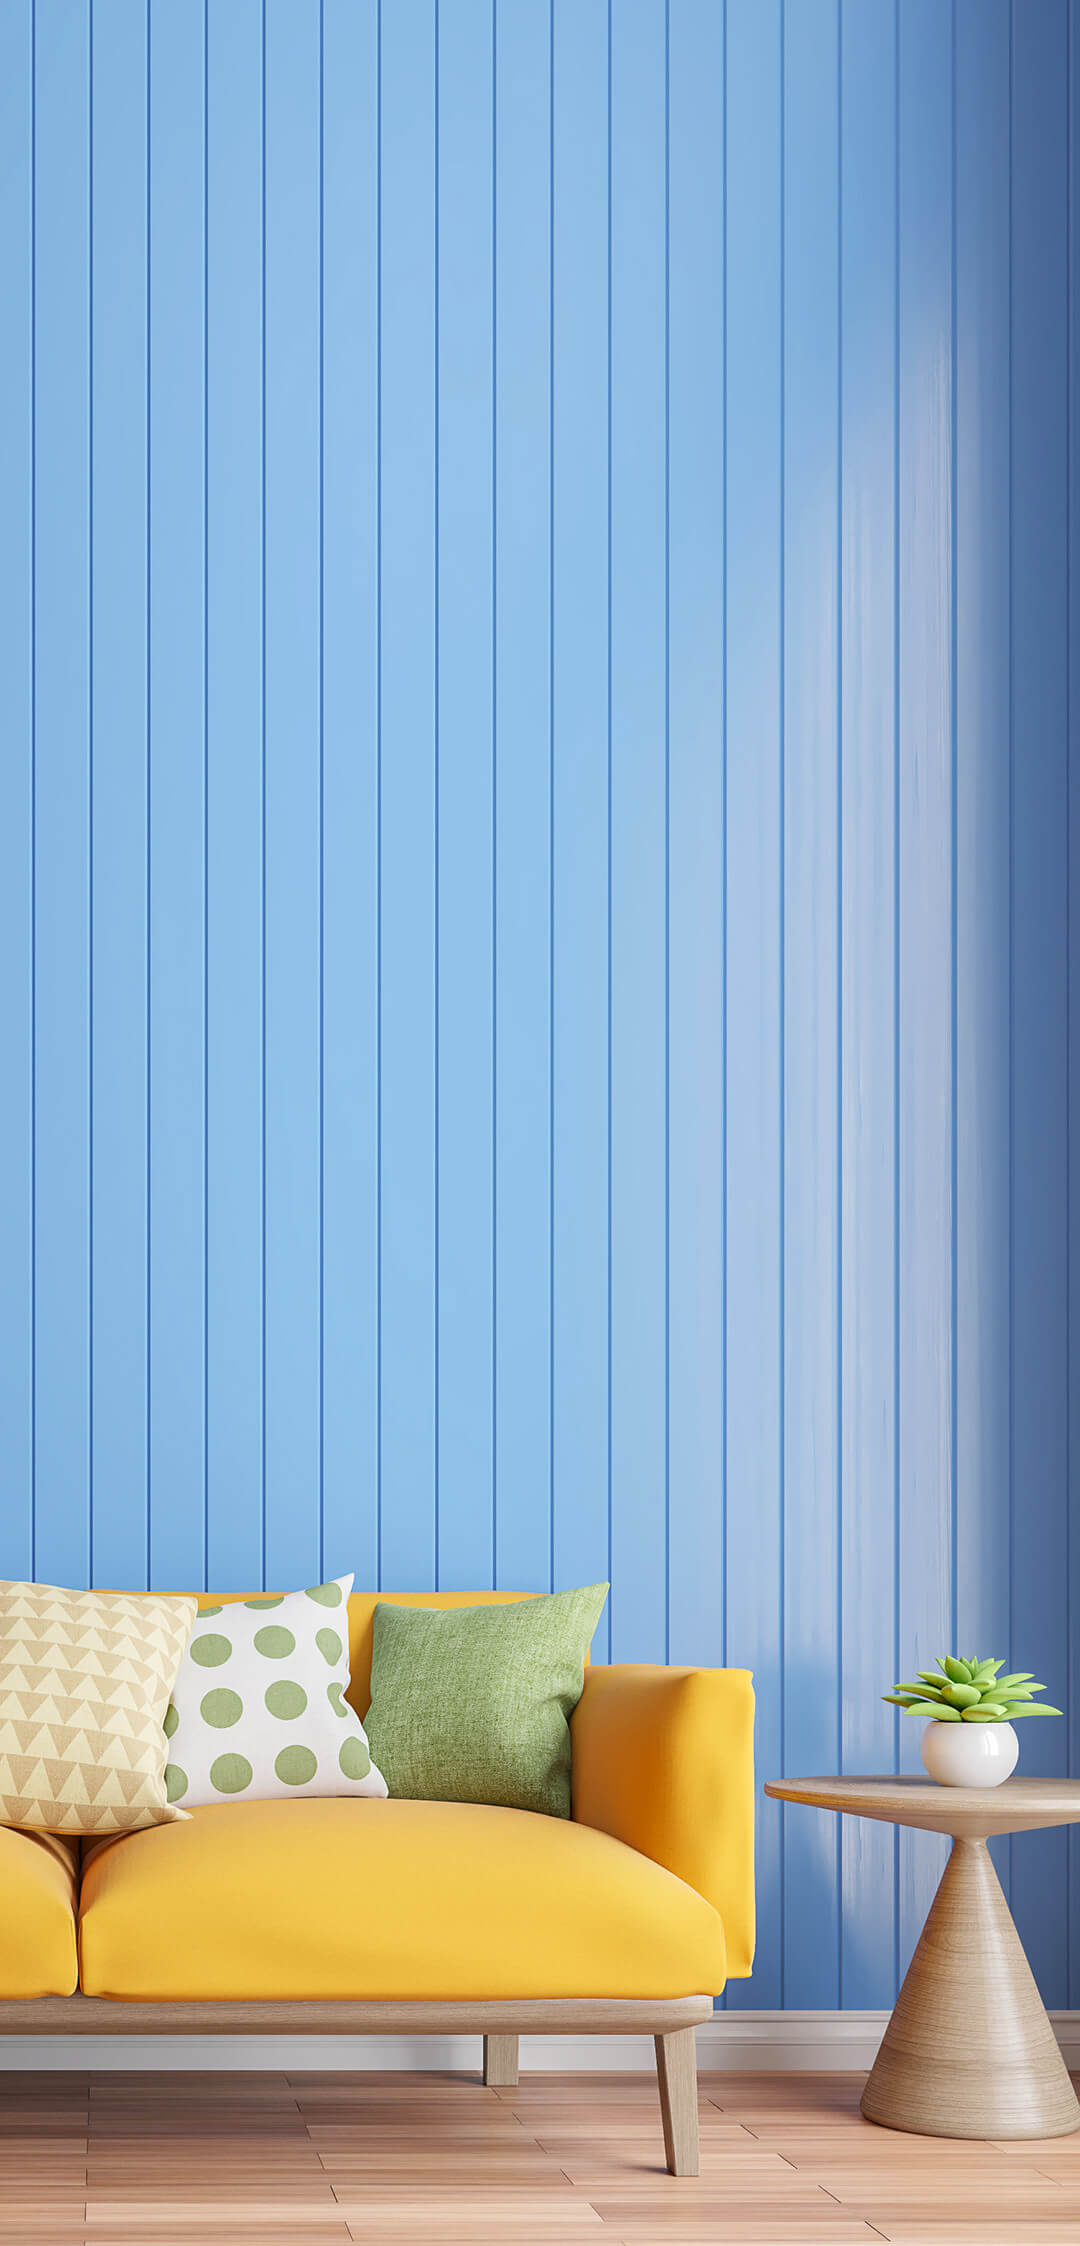 Asus Zenfone Max M1 - 1080x2246 Wallpaper 